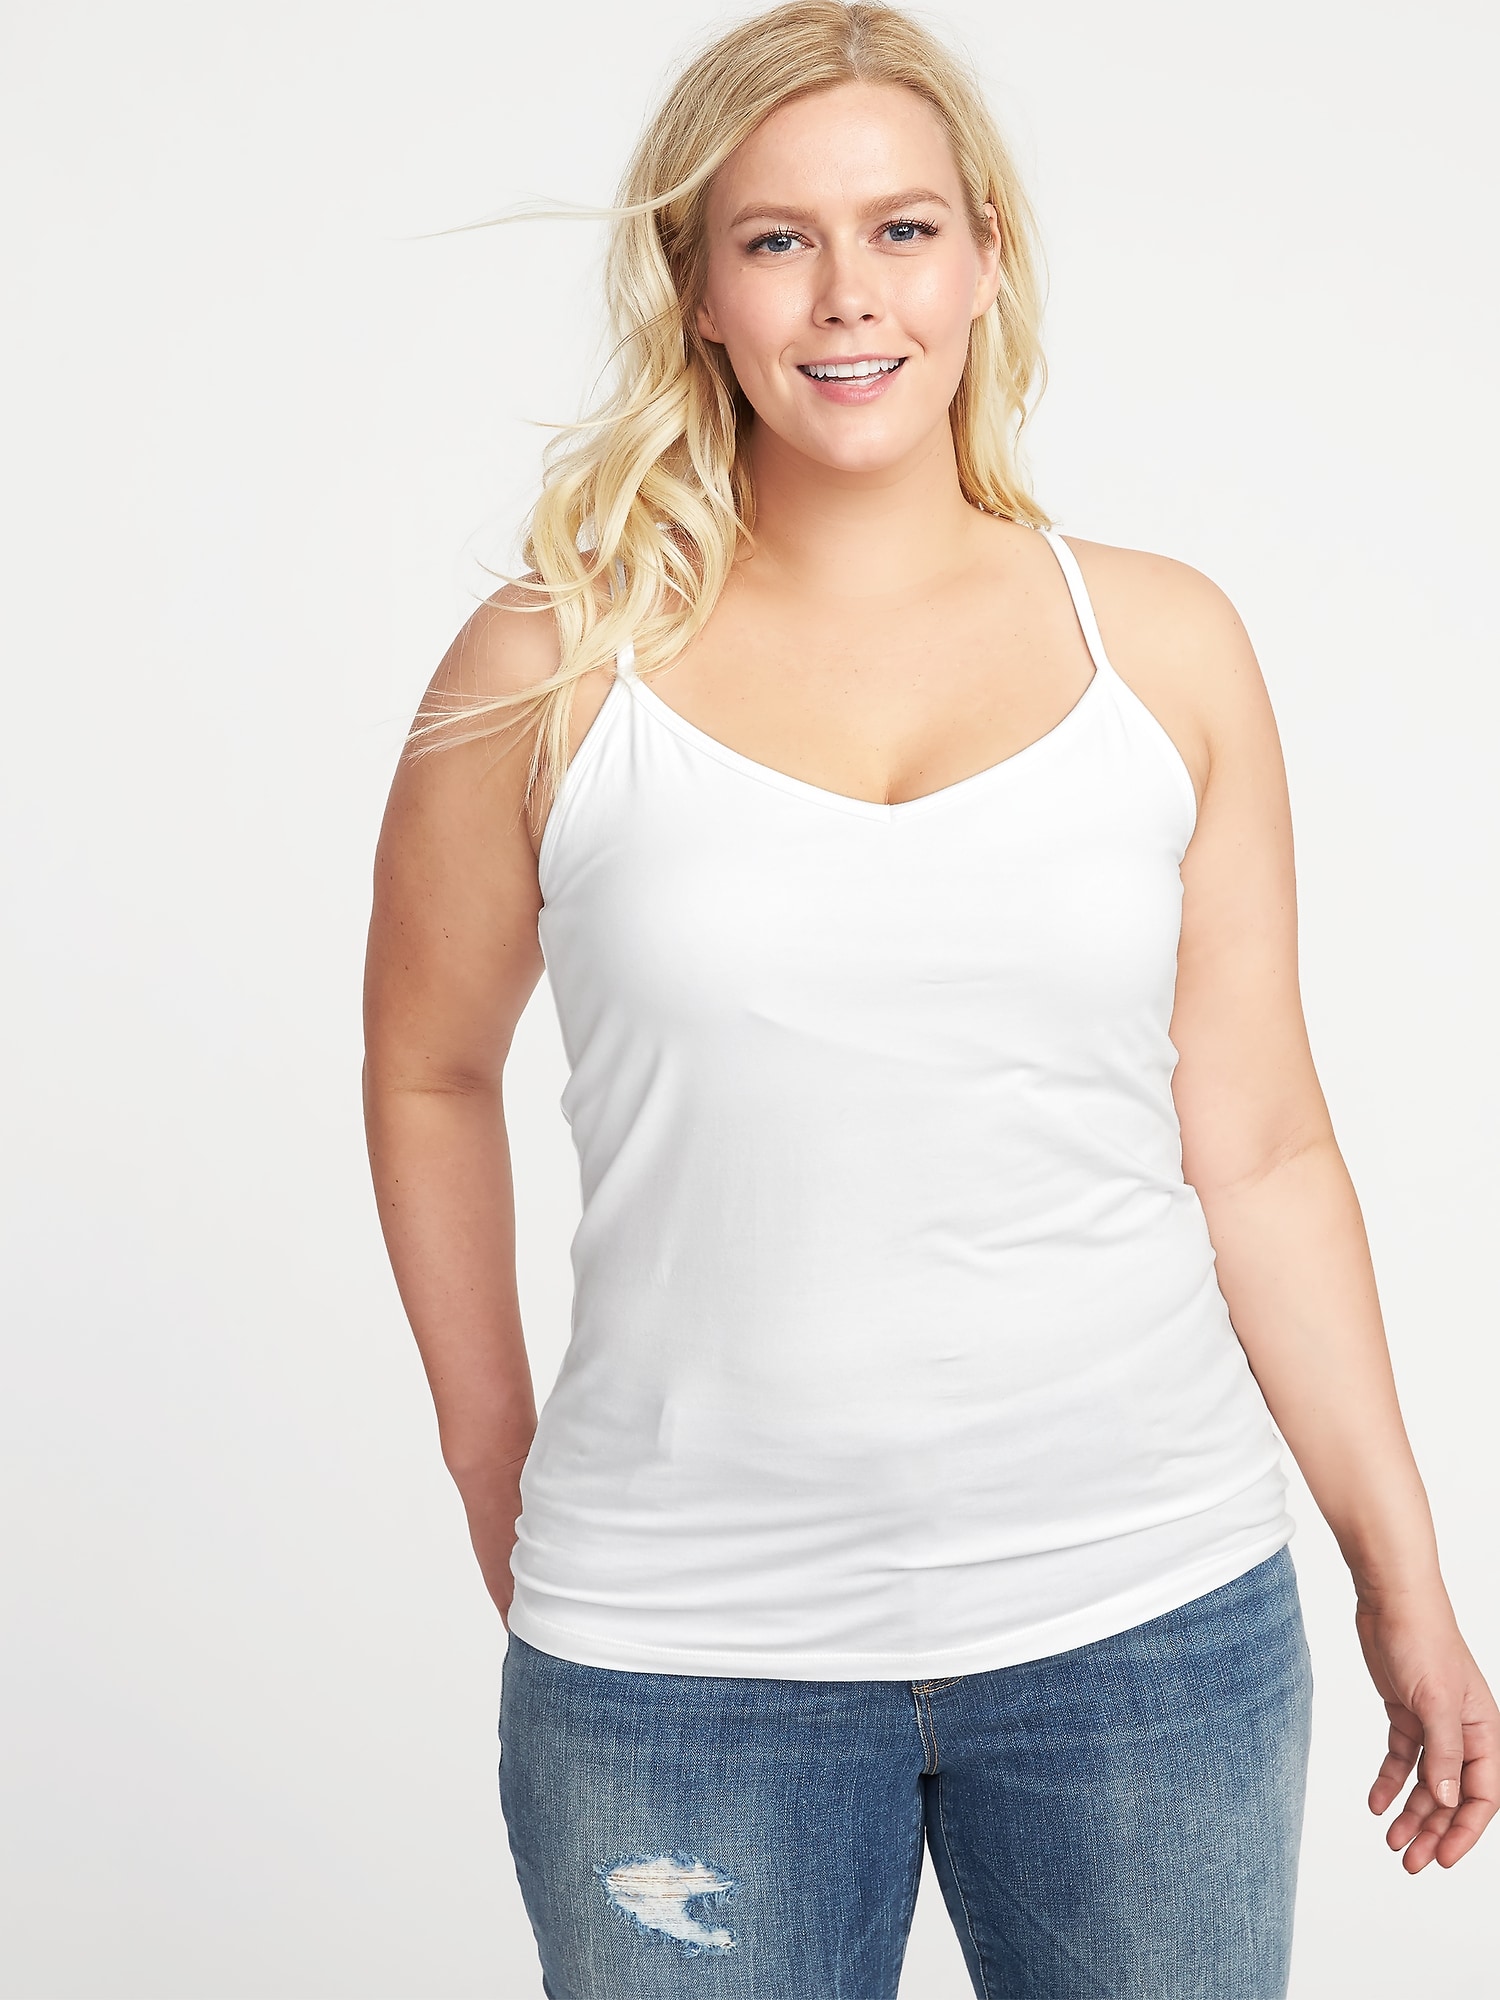 JGGSPWM Women Cotton Plus Size Camisole Shelf Bra Cami Tank Tops